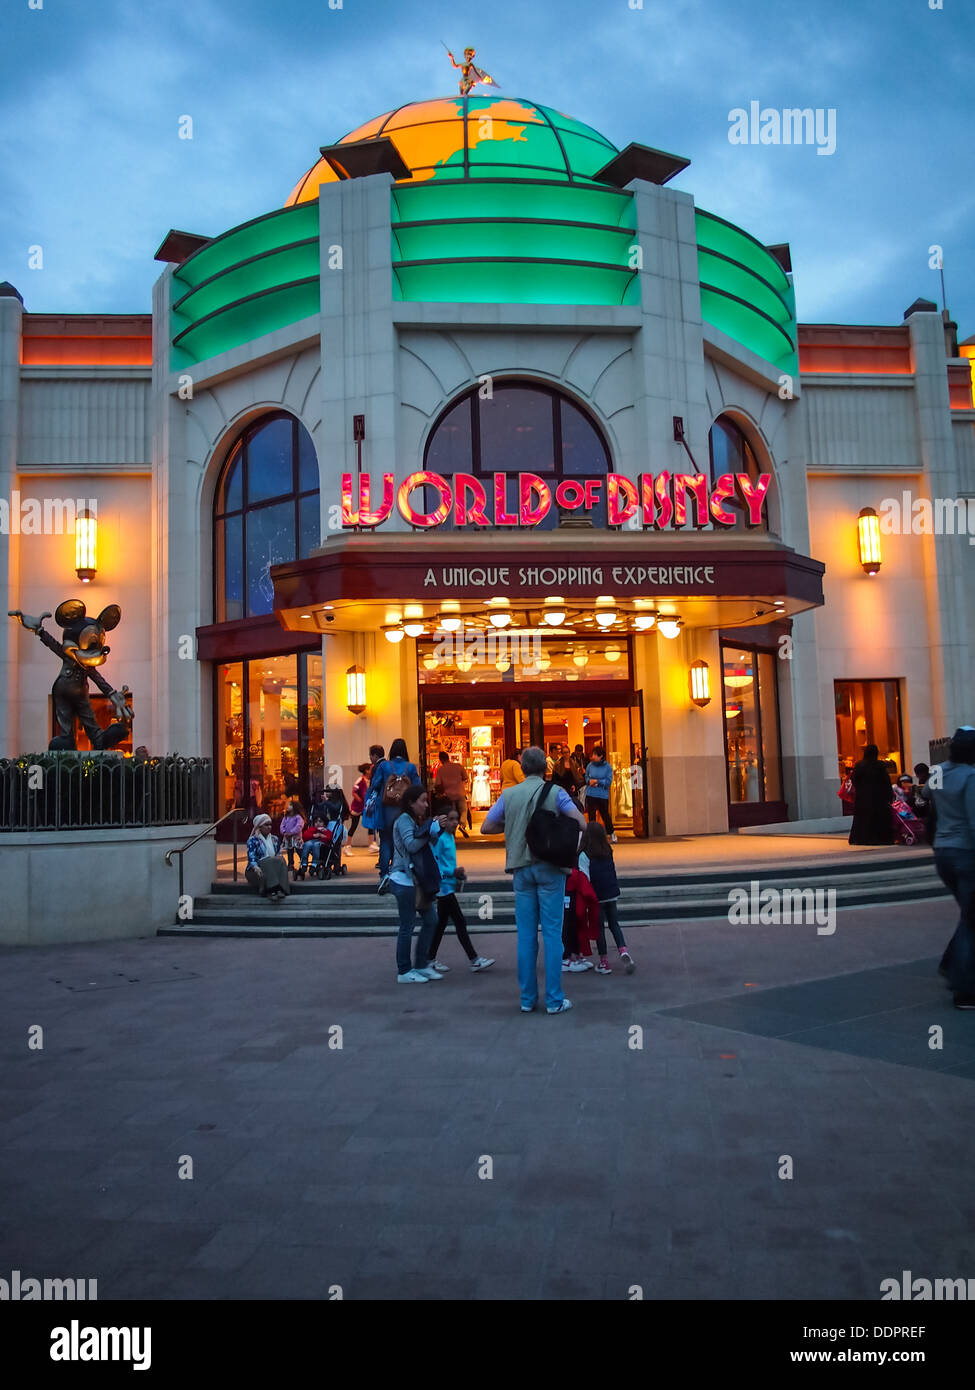 The World of Disney store at Disneyland Paris, France Stock Photo